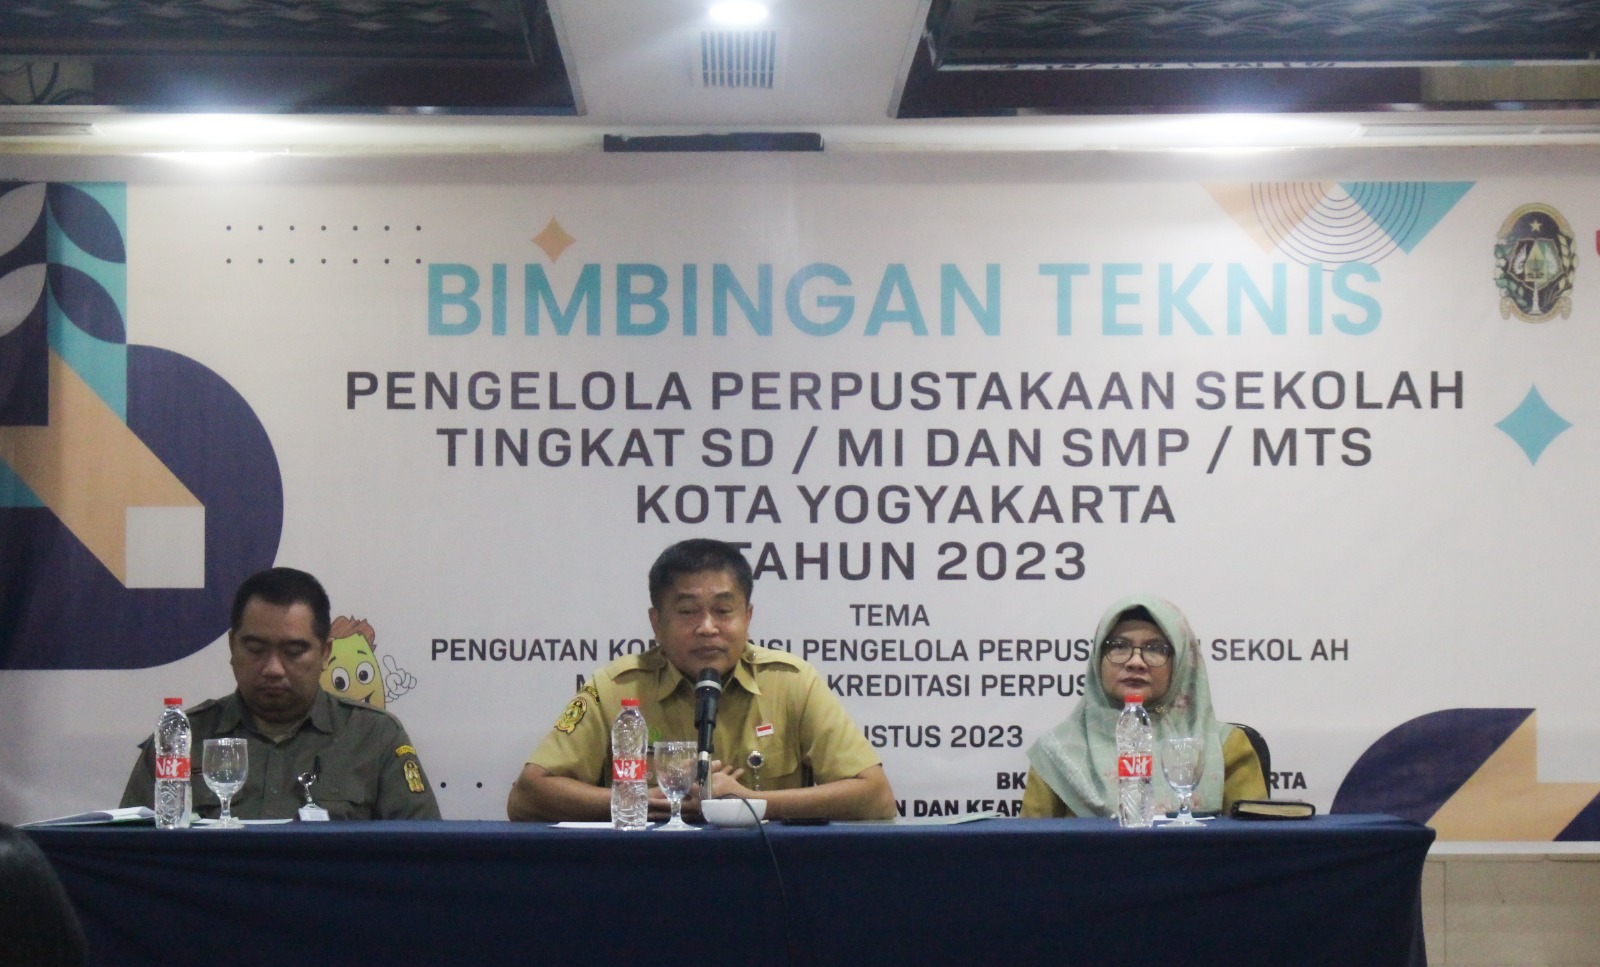 Bimbingan Teknis Pengelolaan Perpustakaan SD/MI dan SMP/MTs di Wilayah Kota Yogyakarta